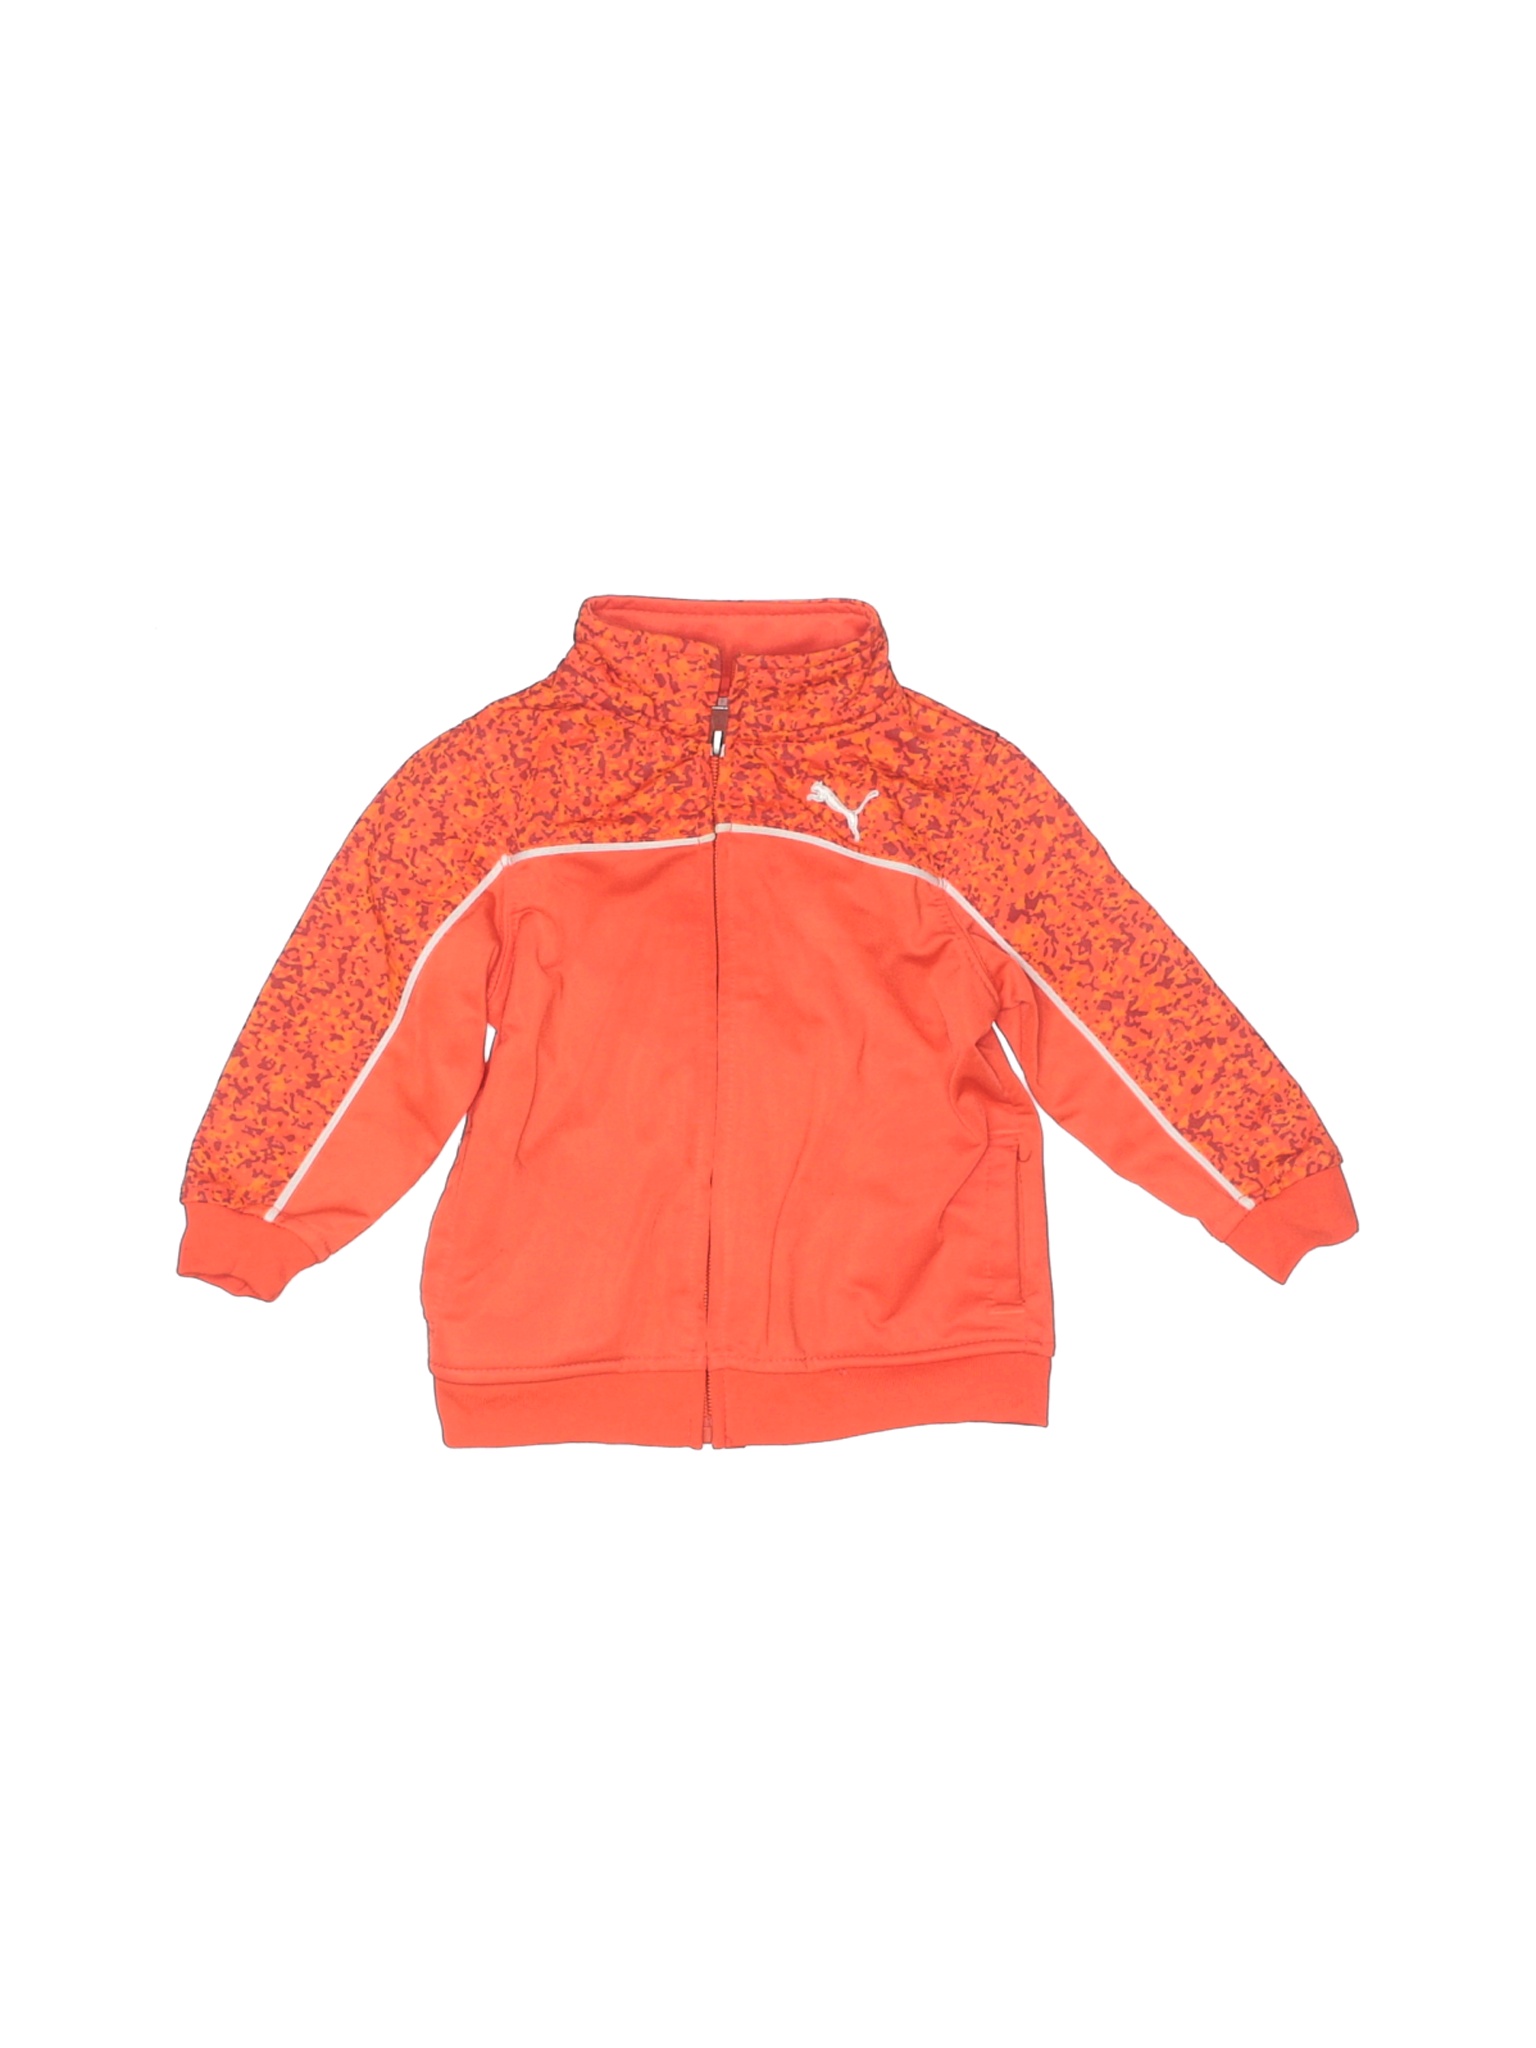 puma orange track jacket